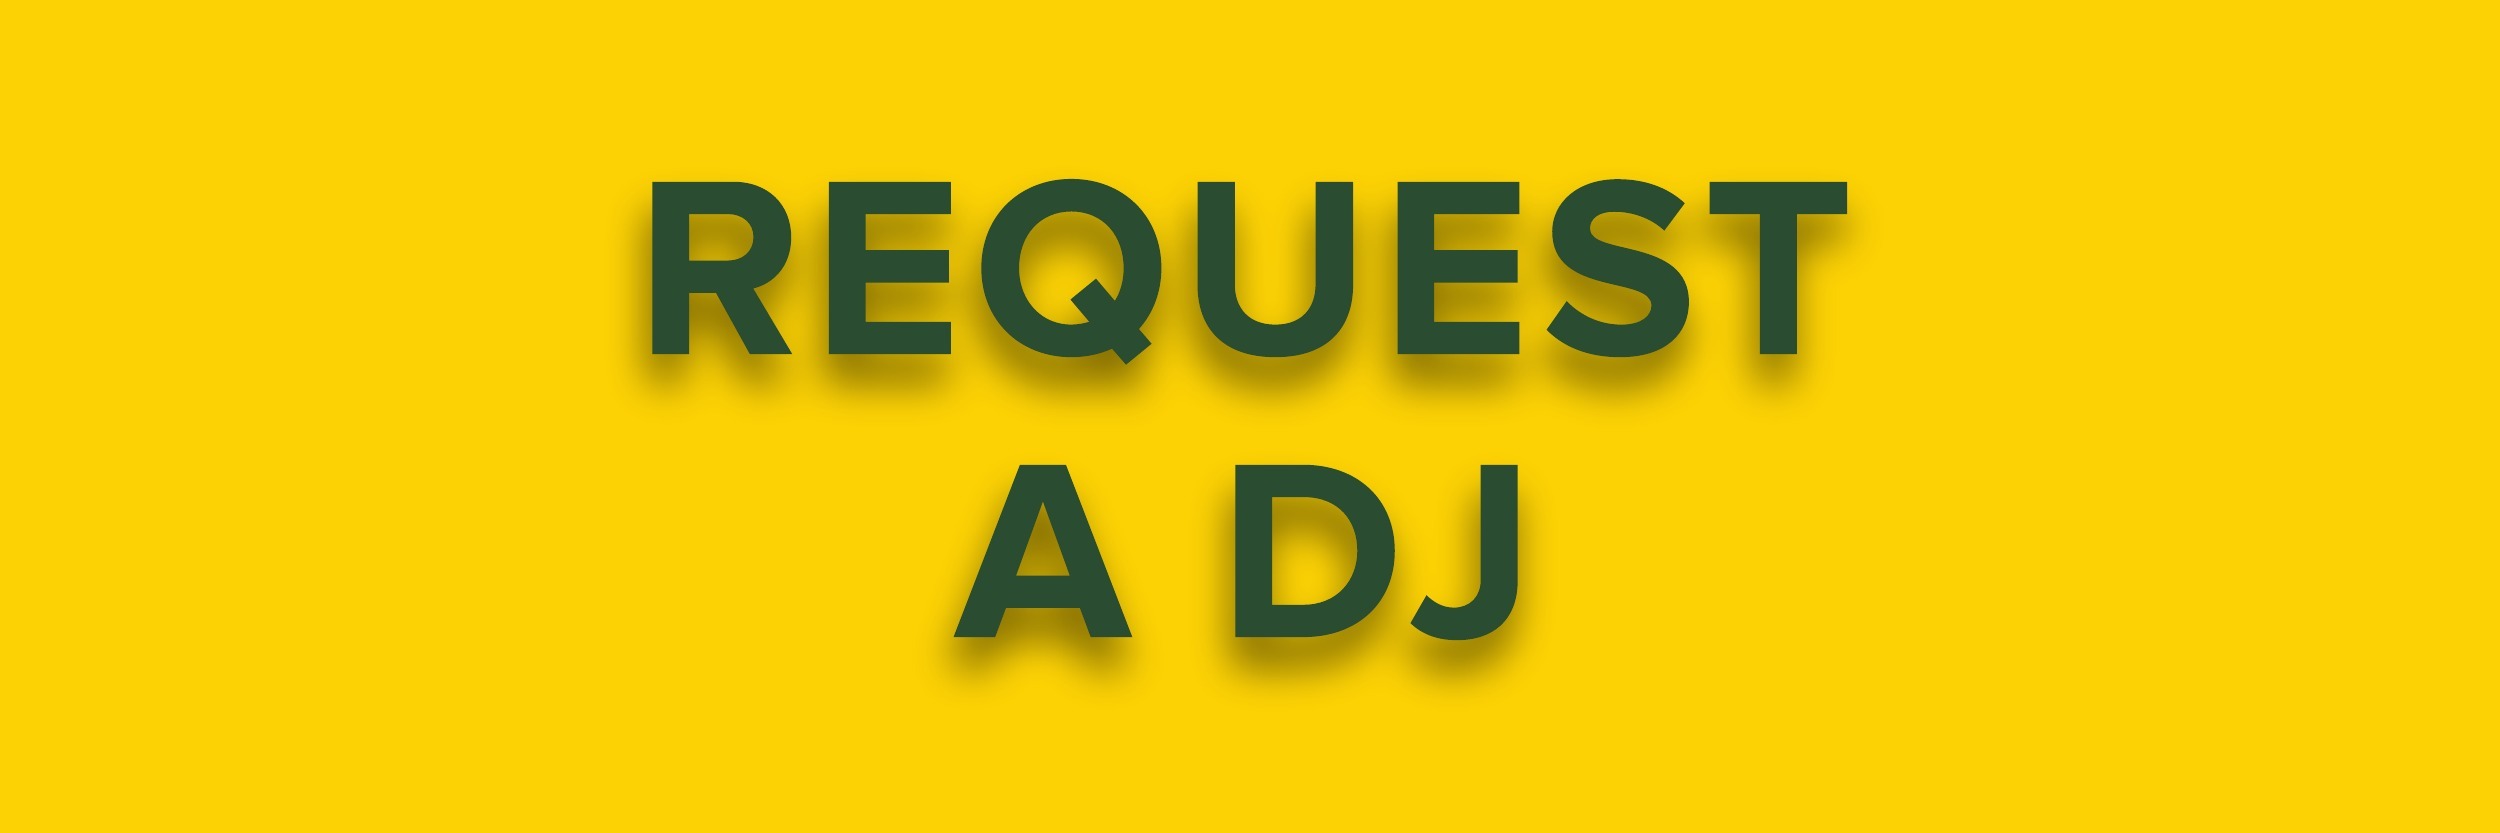 DJ REQUEST FORM